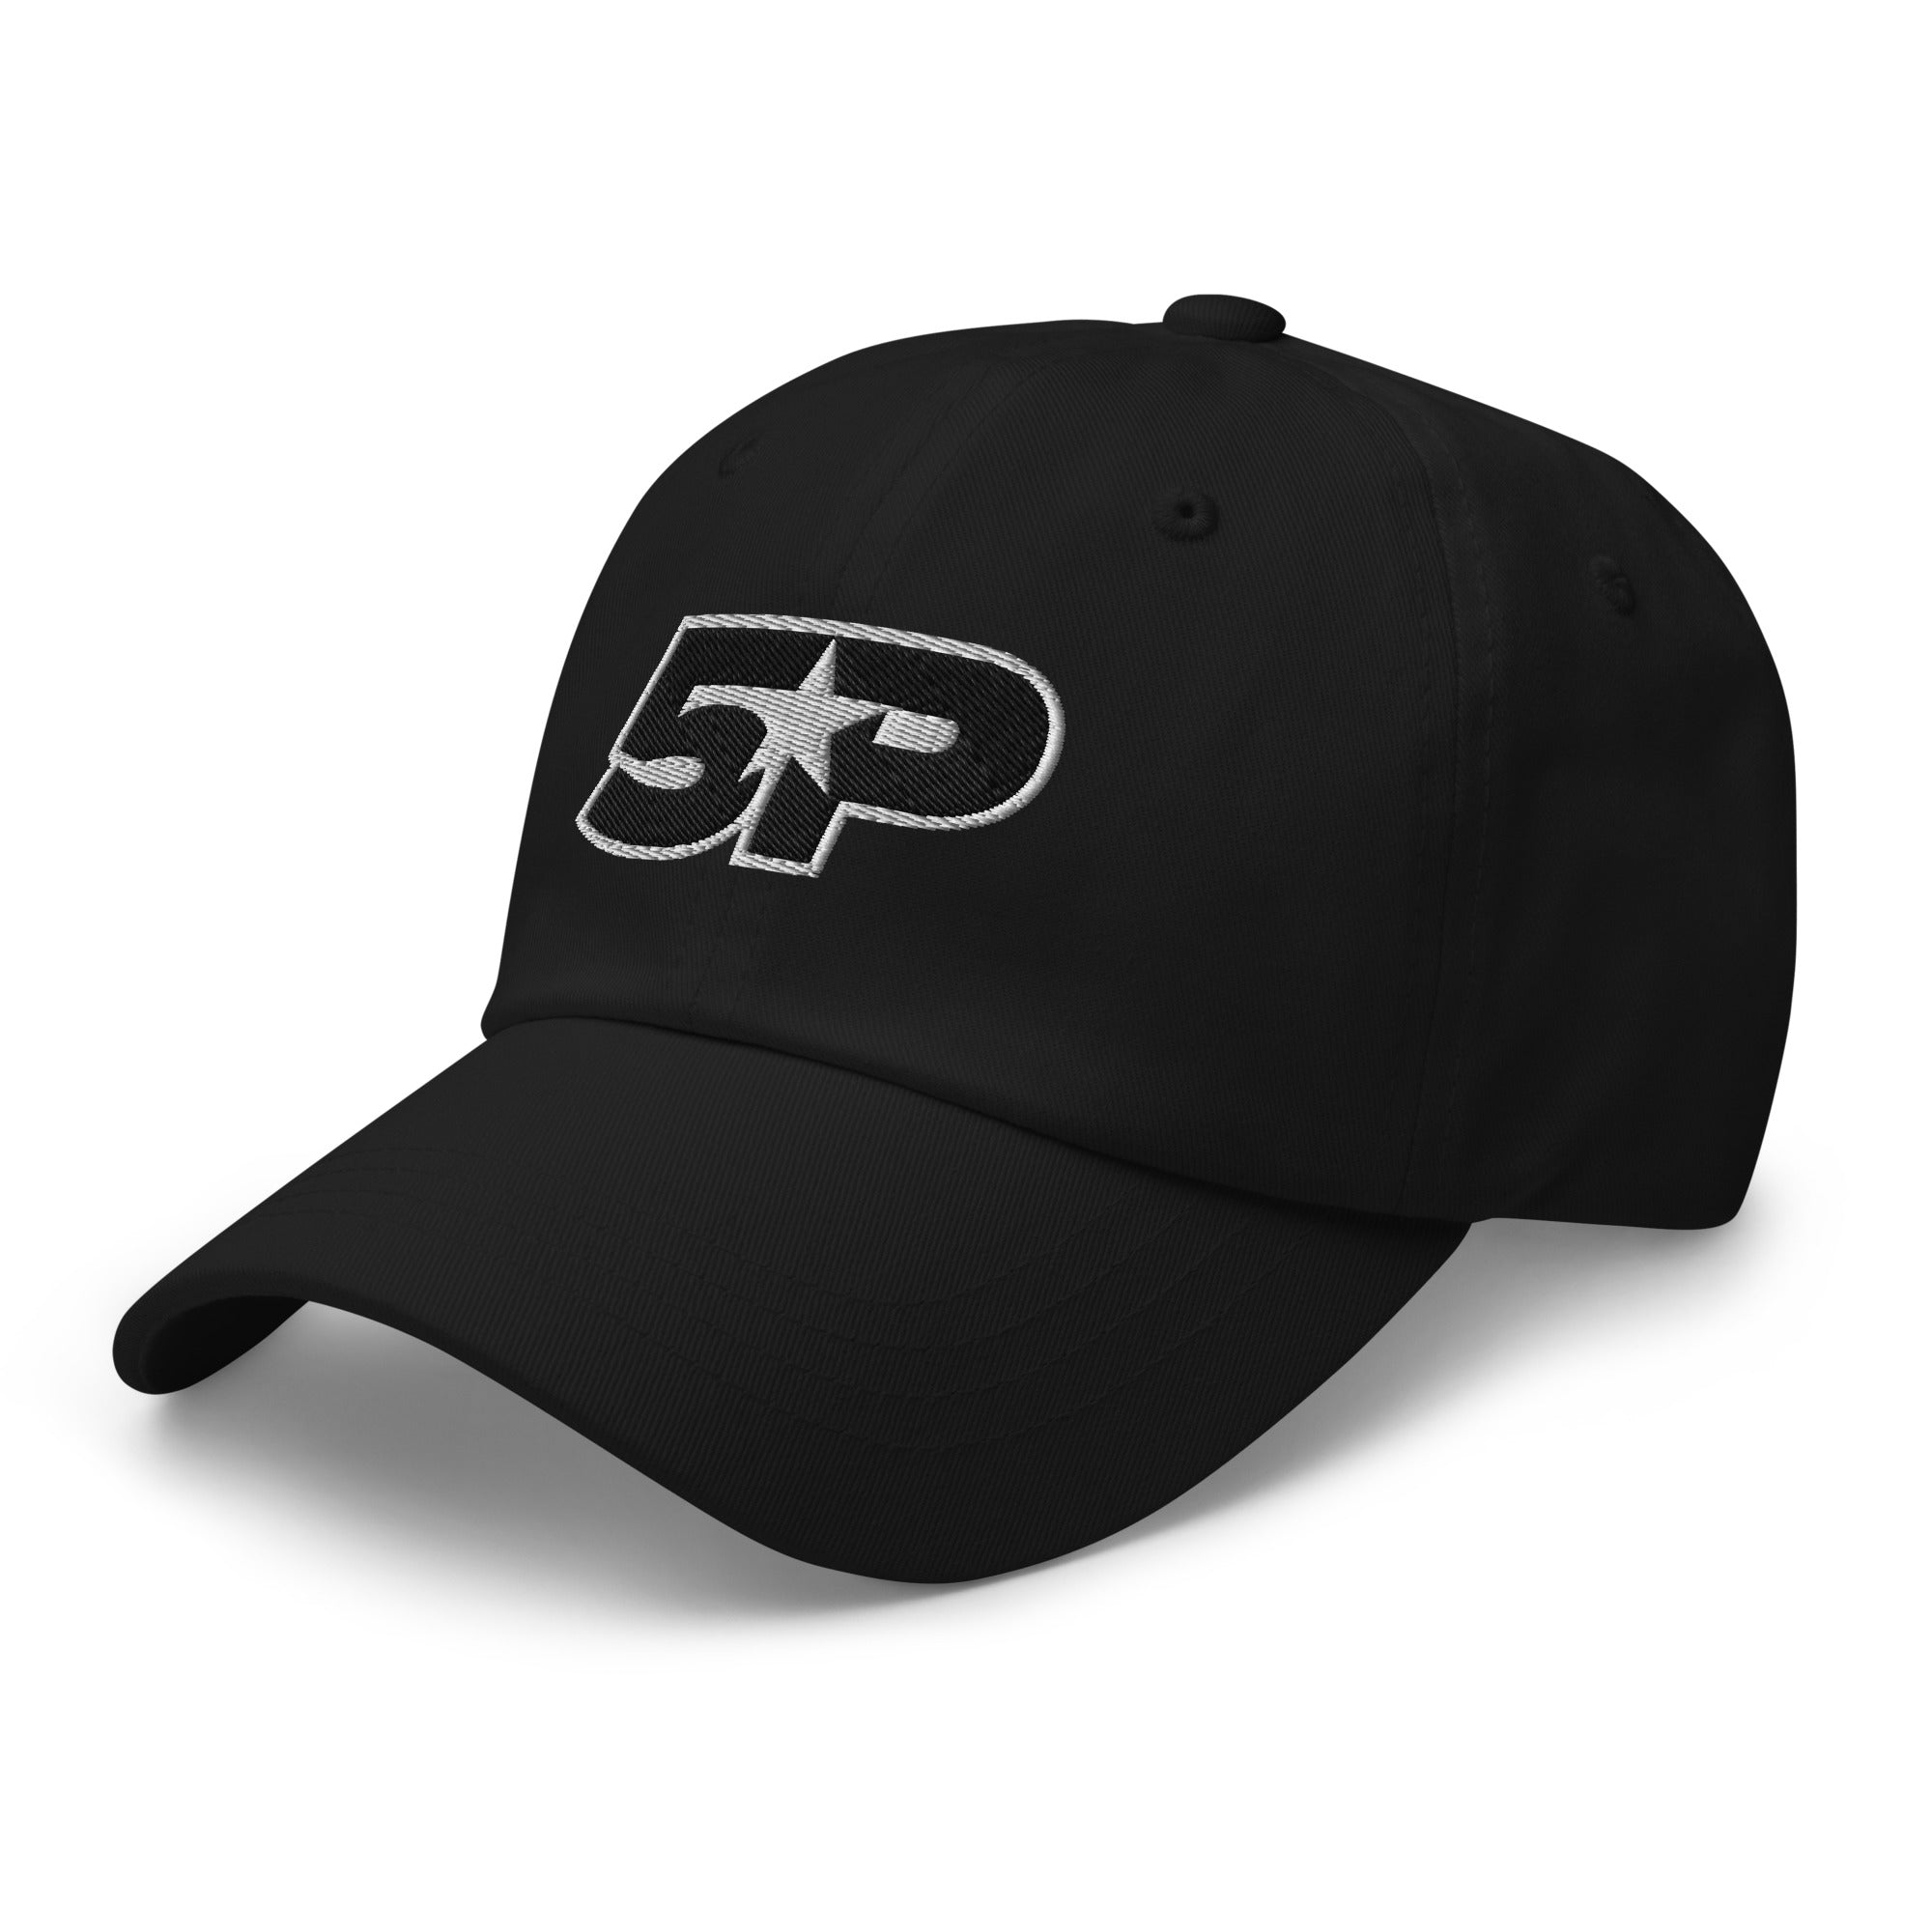 5P Dad hat